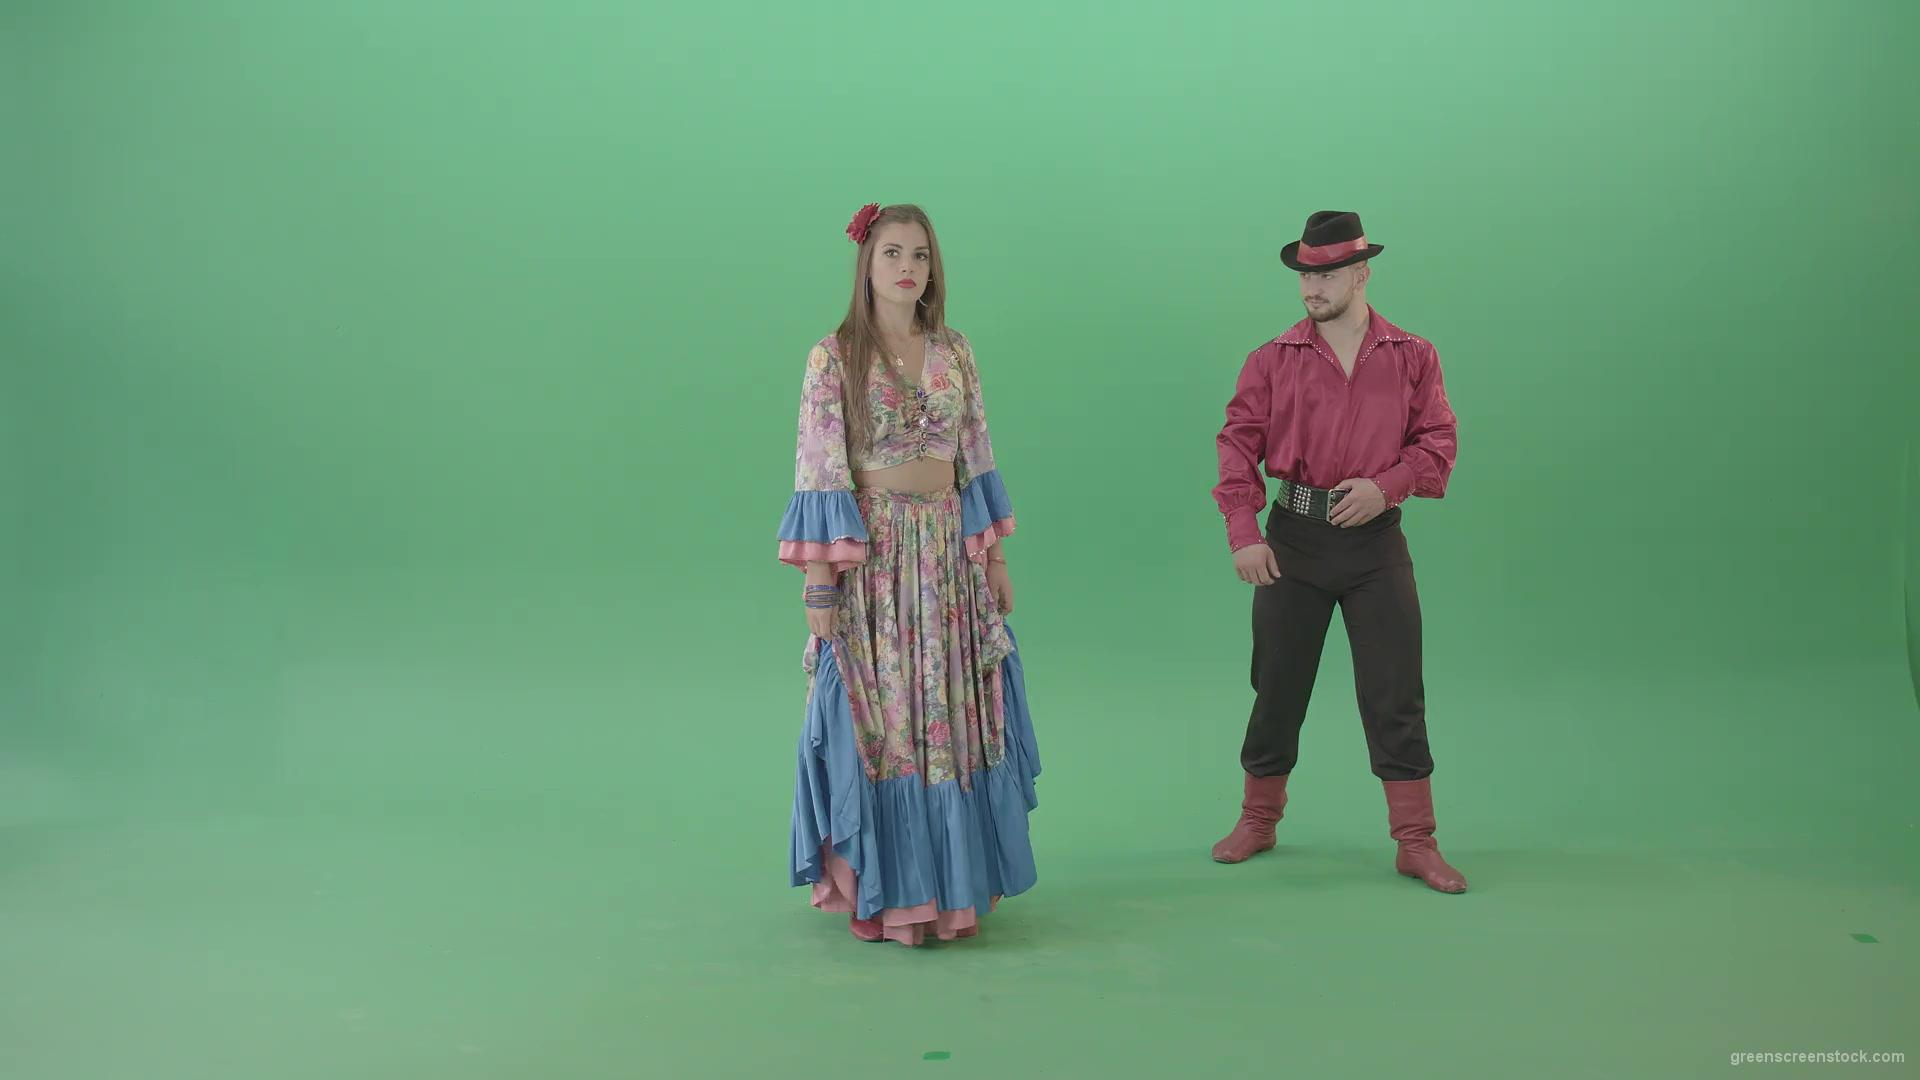 Balkan-couple-dance-hot-folk-dance-in-gypsy-comstumes-in-green-screen-studio-4K-Video-Footage-1920_001 Green Screen Stock